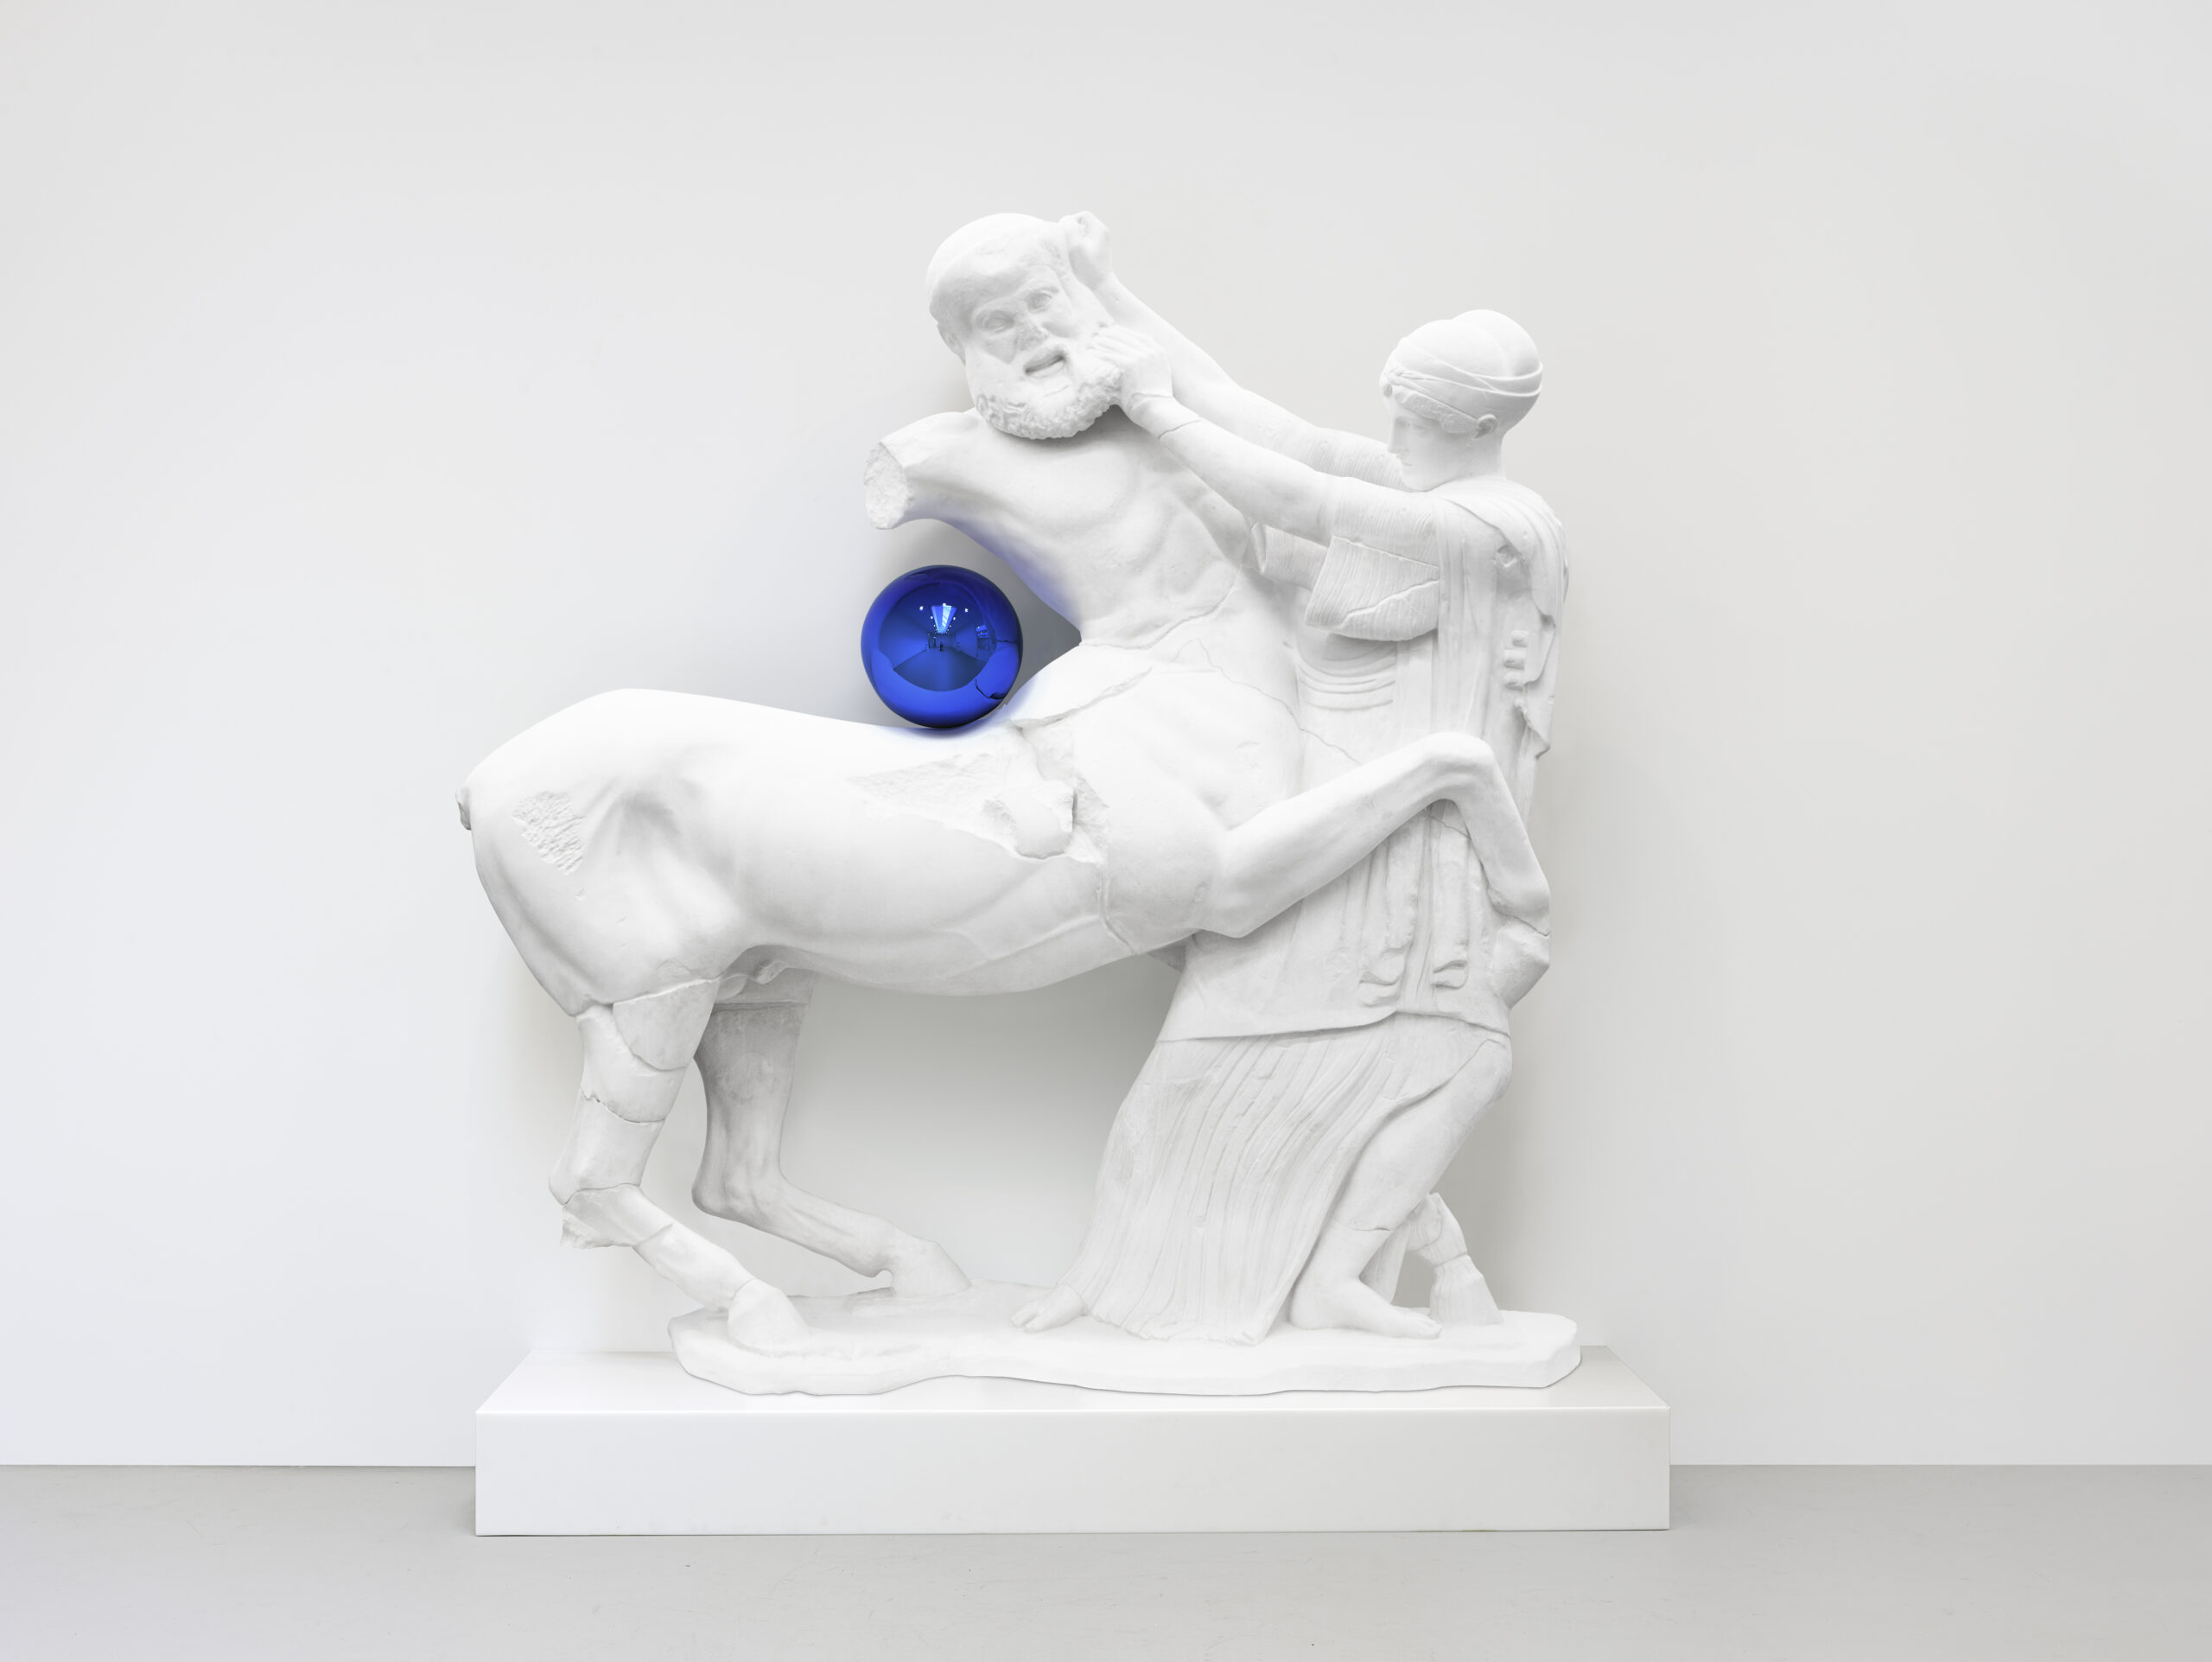 Armonici contrasti e superfici specchianti. Jeff Koons porta una Gazing Ball a Milano